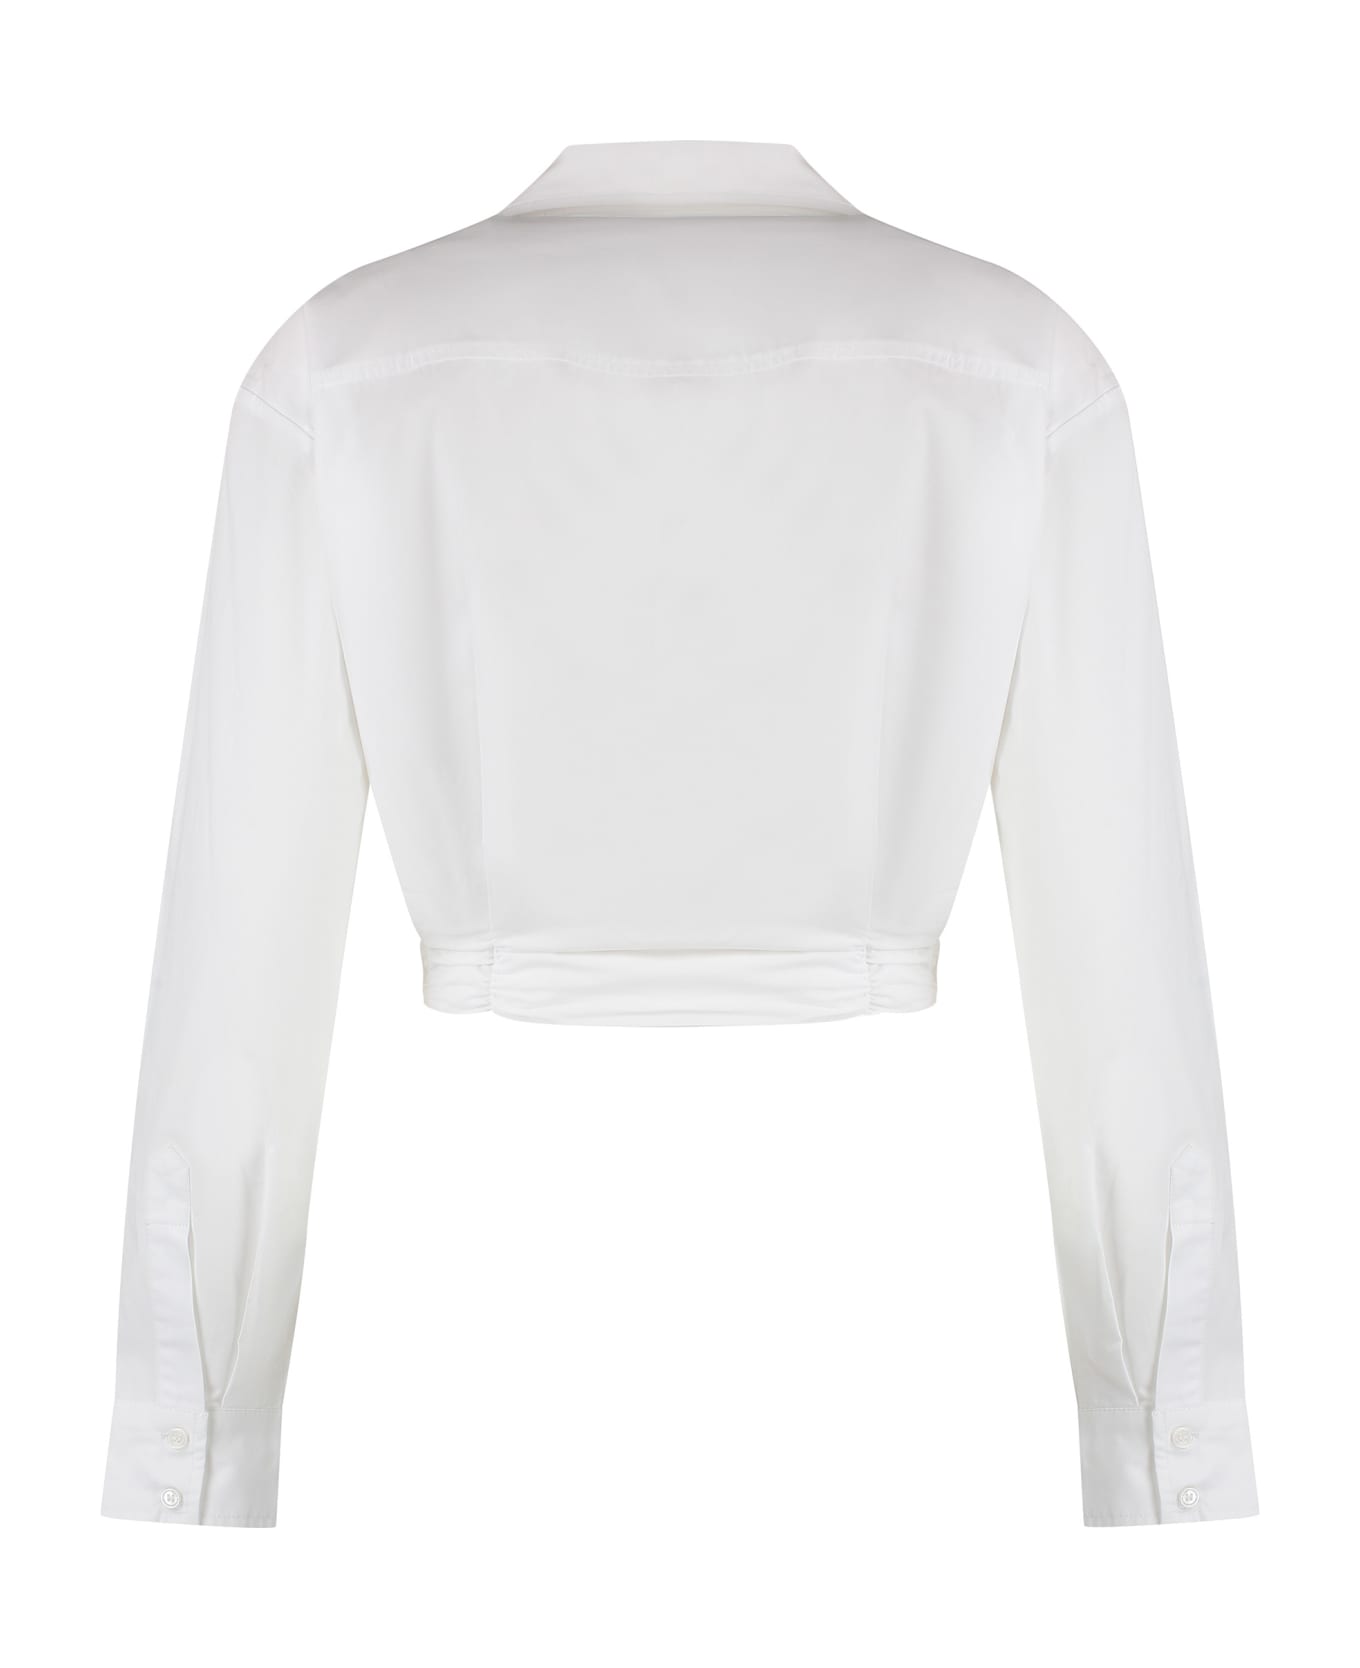 Pinko Camene Cropped Poplin Shirt - White